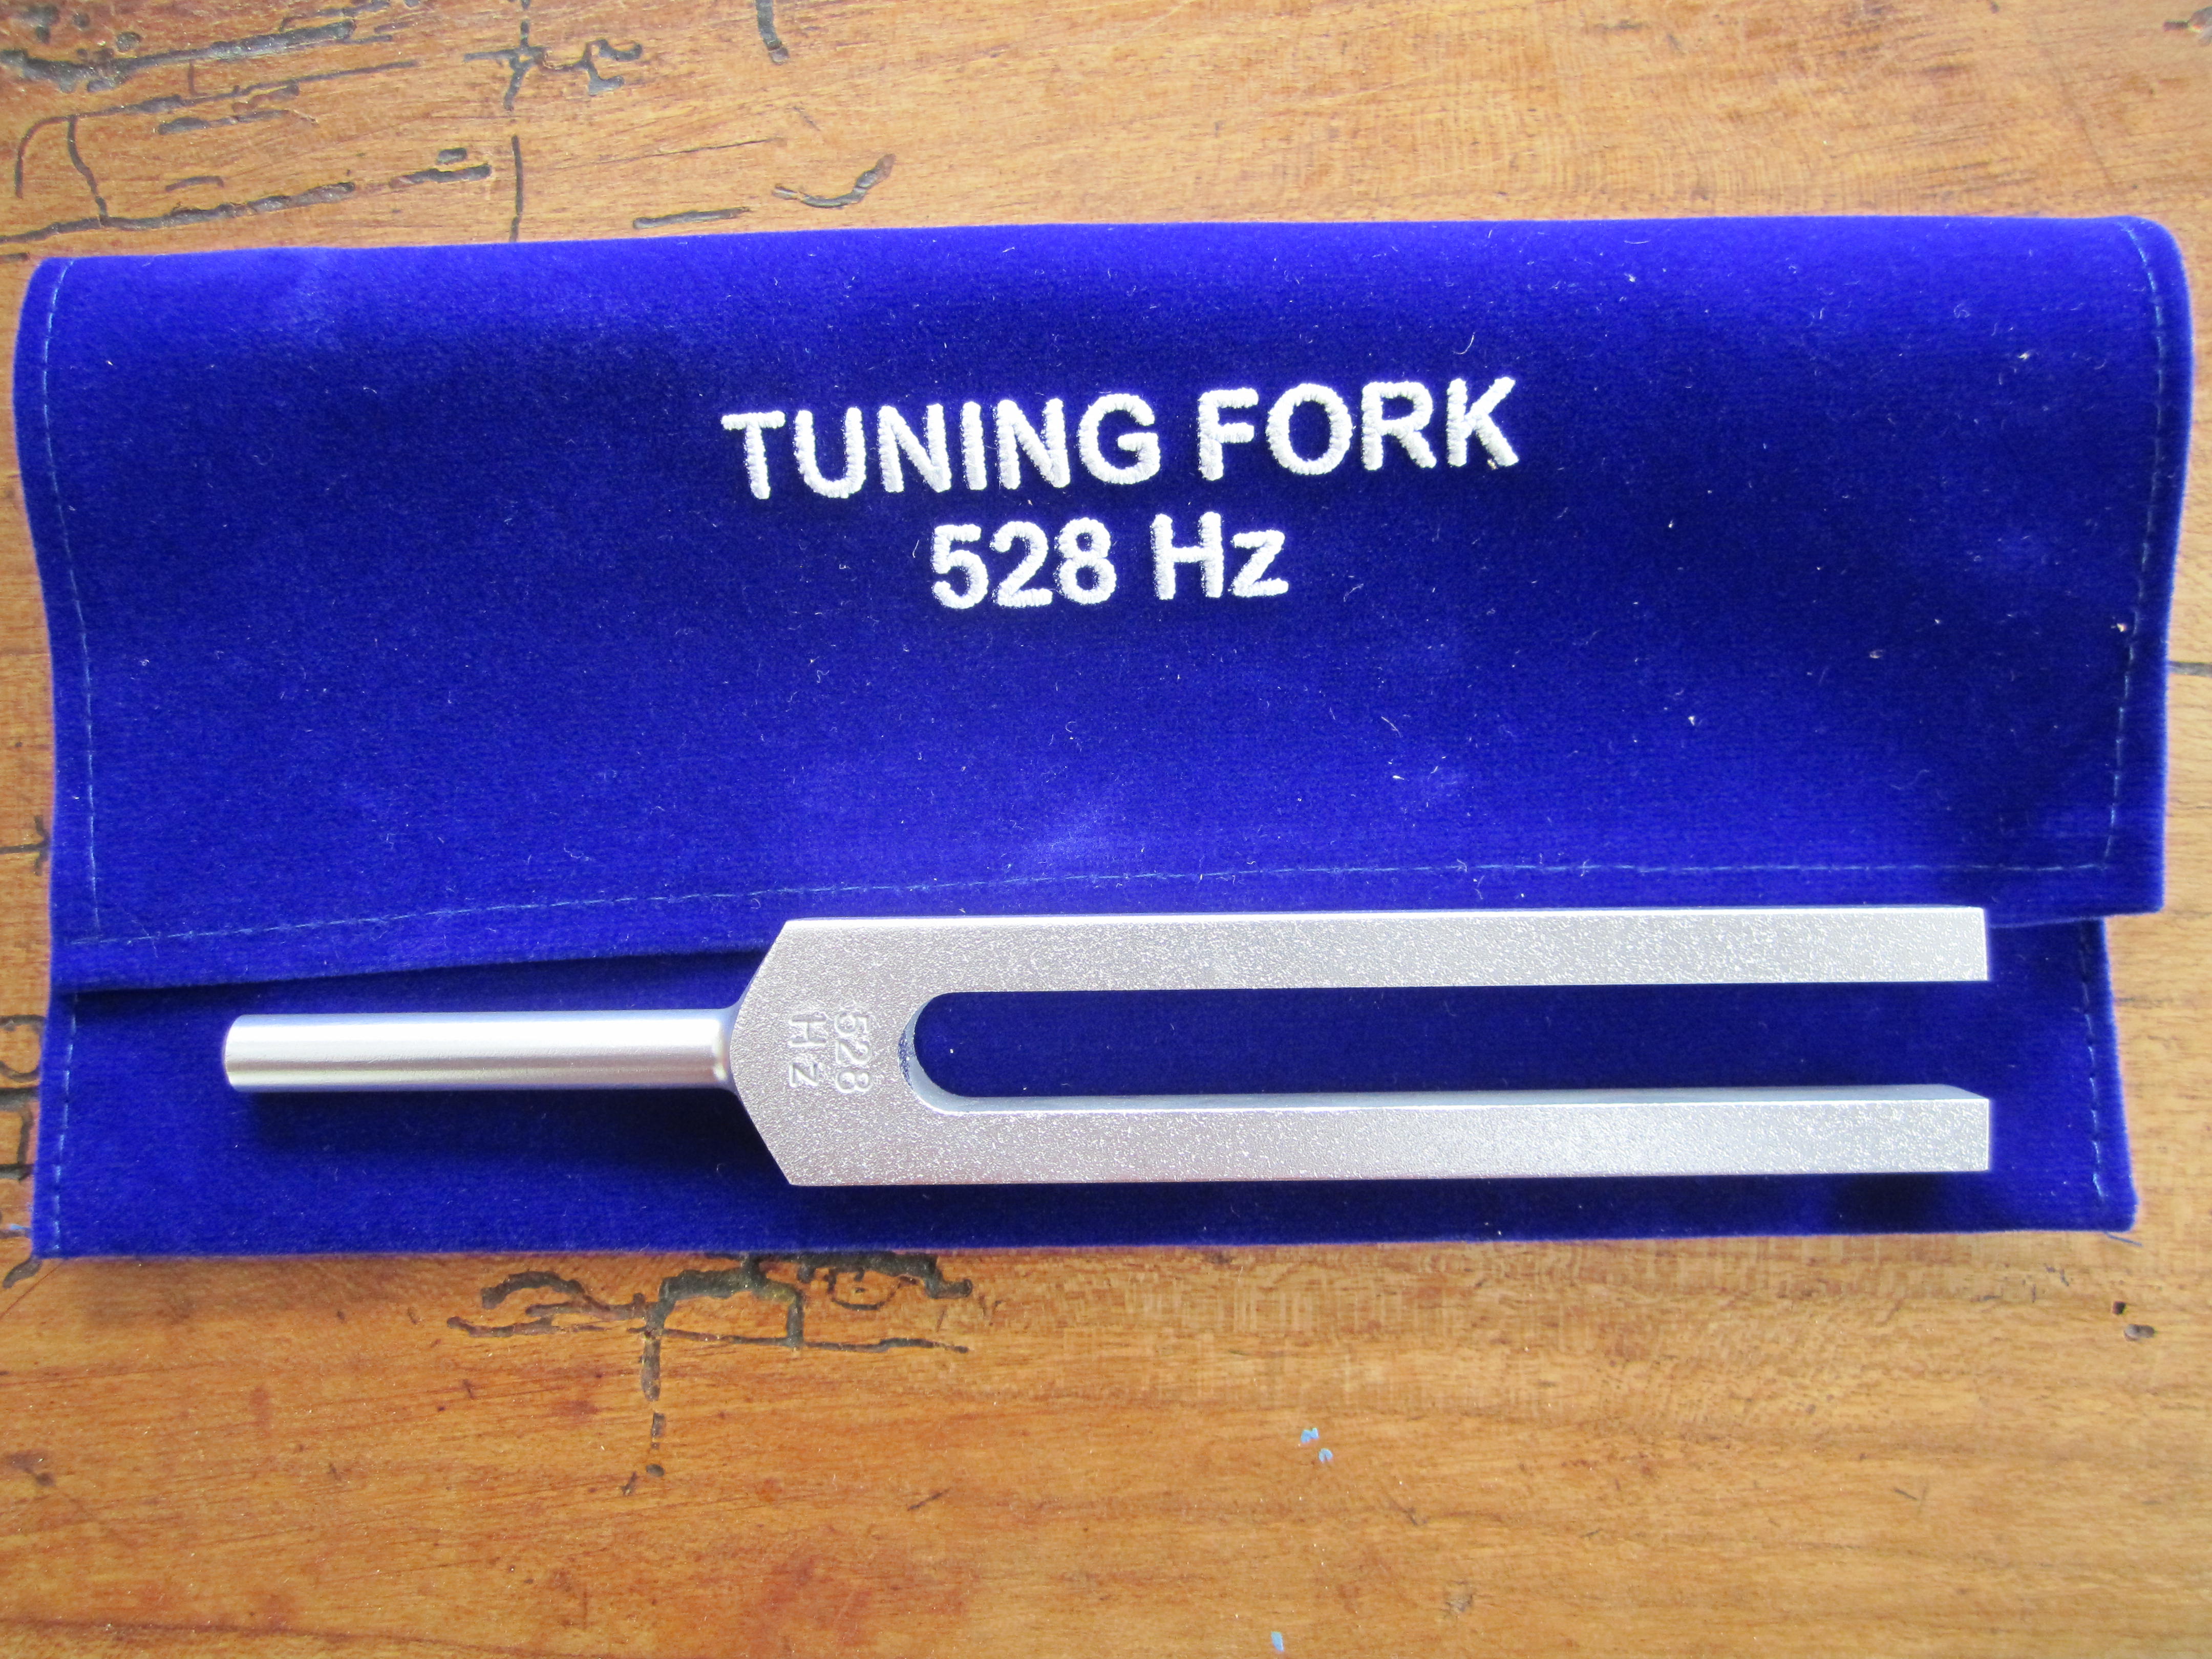 Solfreggio Tuning Forks